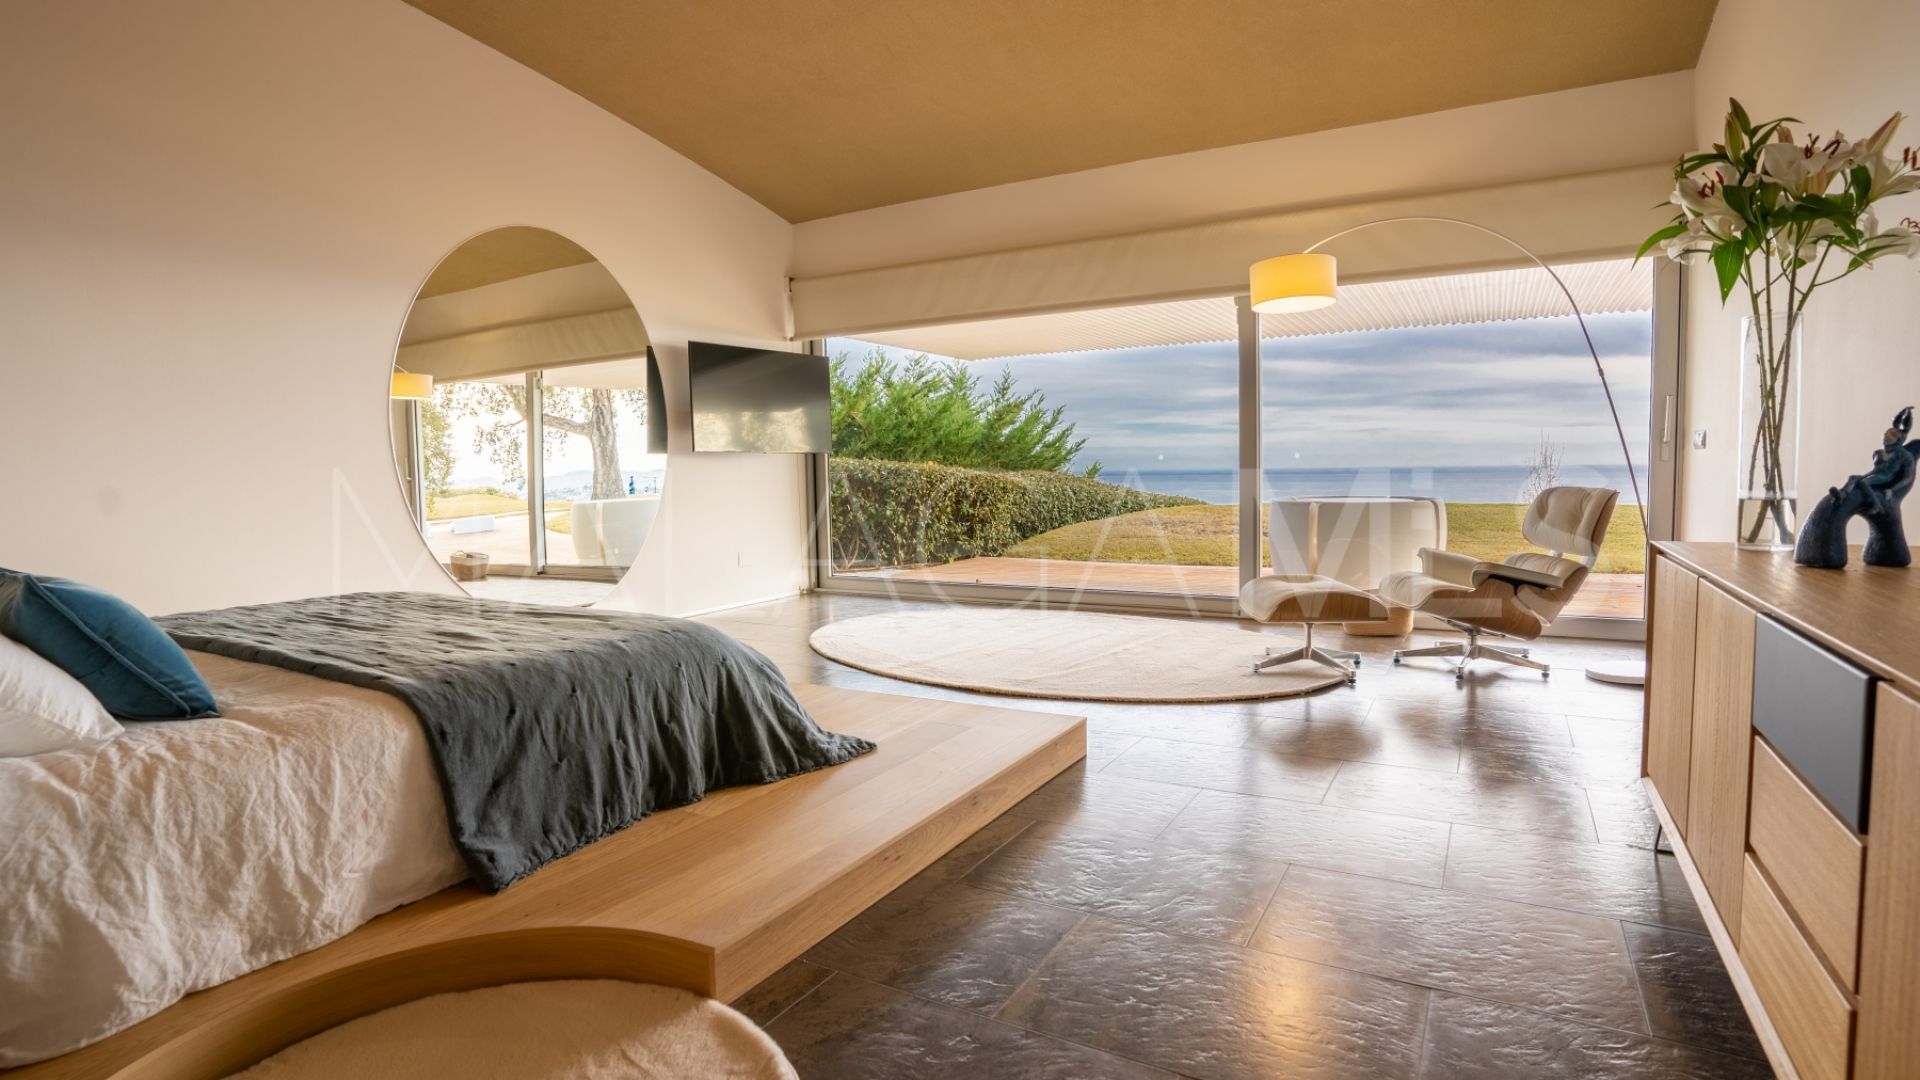 Villa for sale in La Capellania with 5 bedrooms